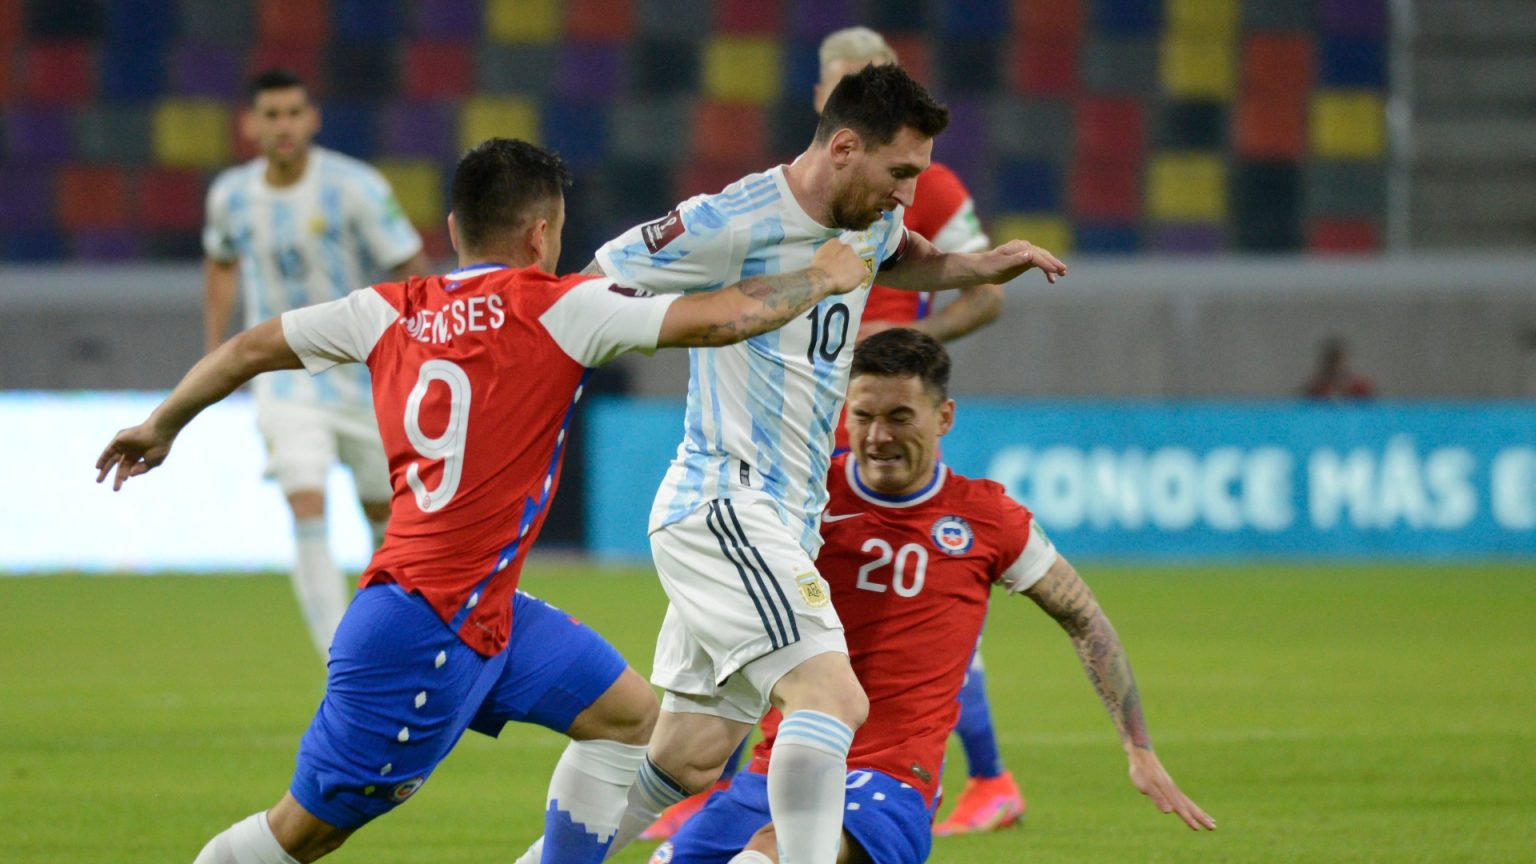 Chile Vs Argentina / Argentina vs Chile EN VIVO ONLINE, Hora Y Donde